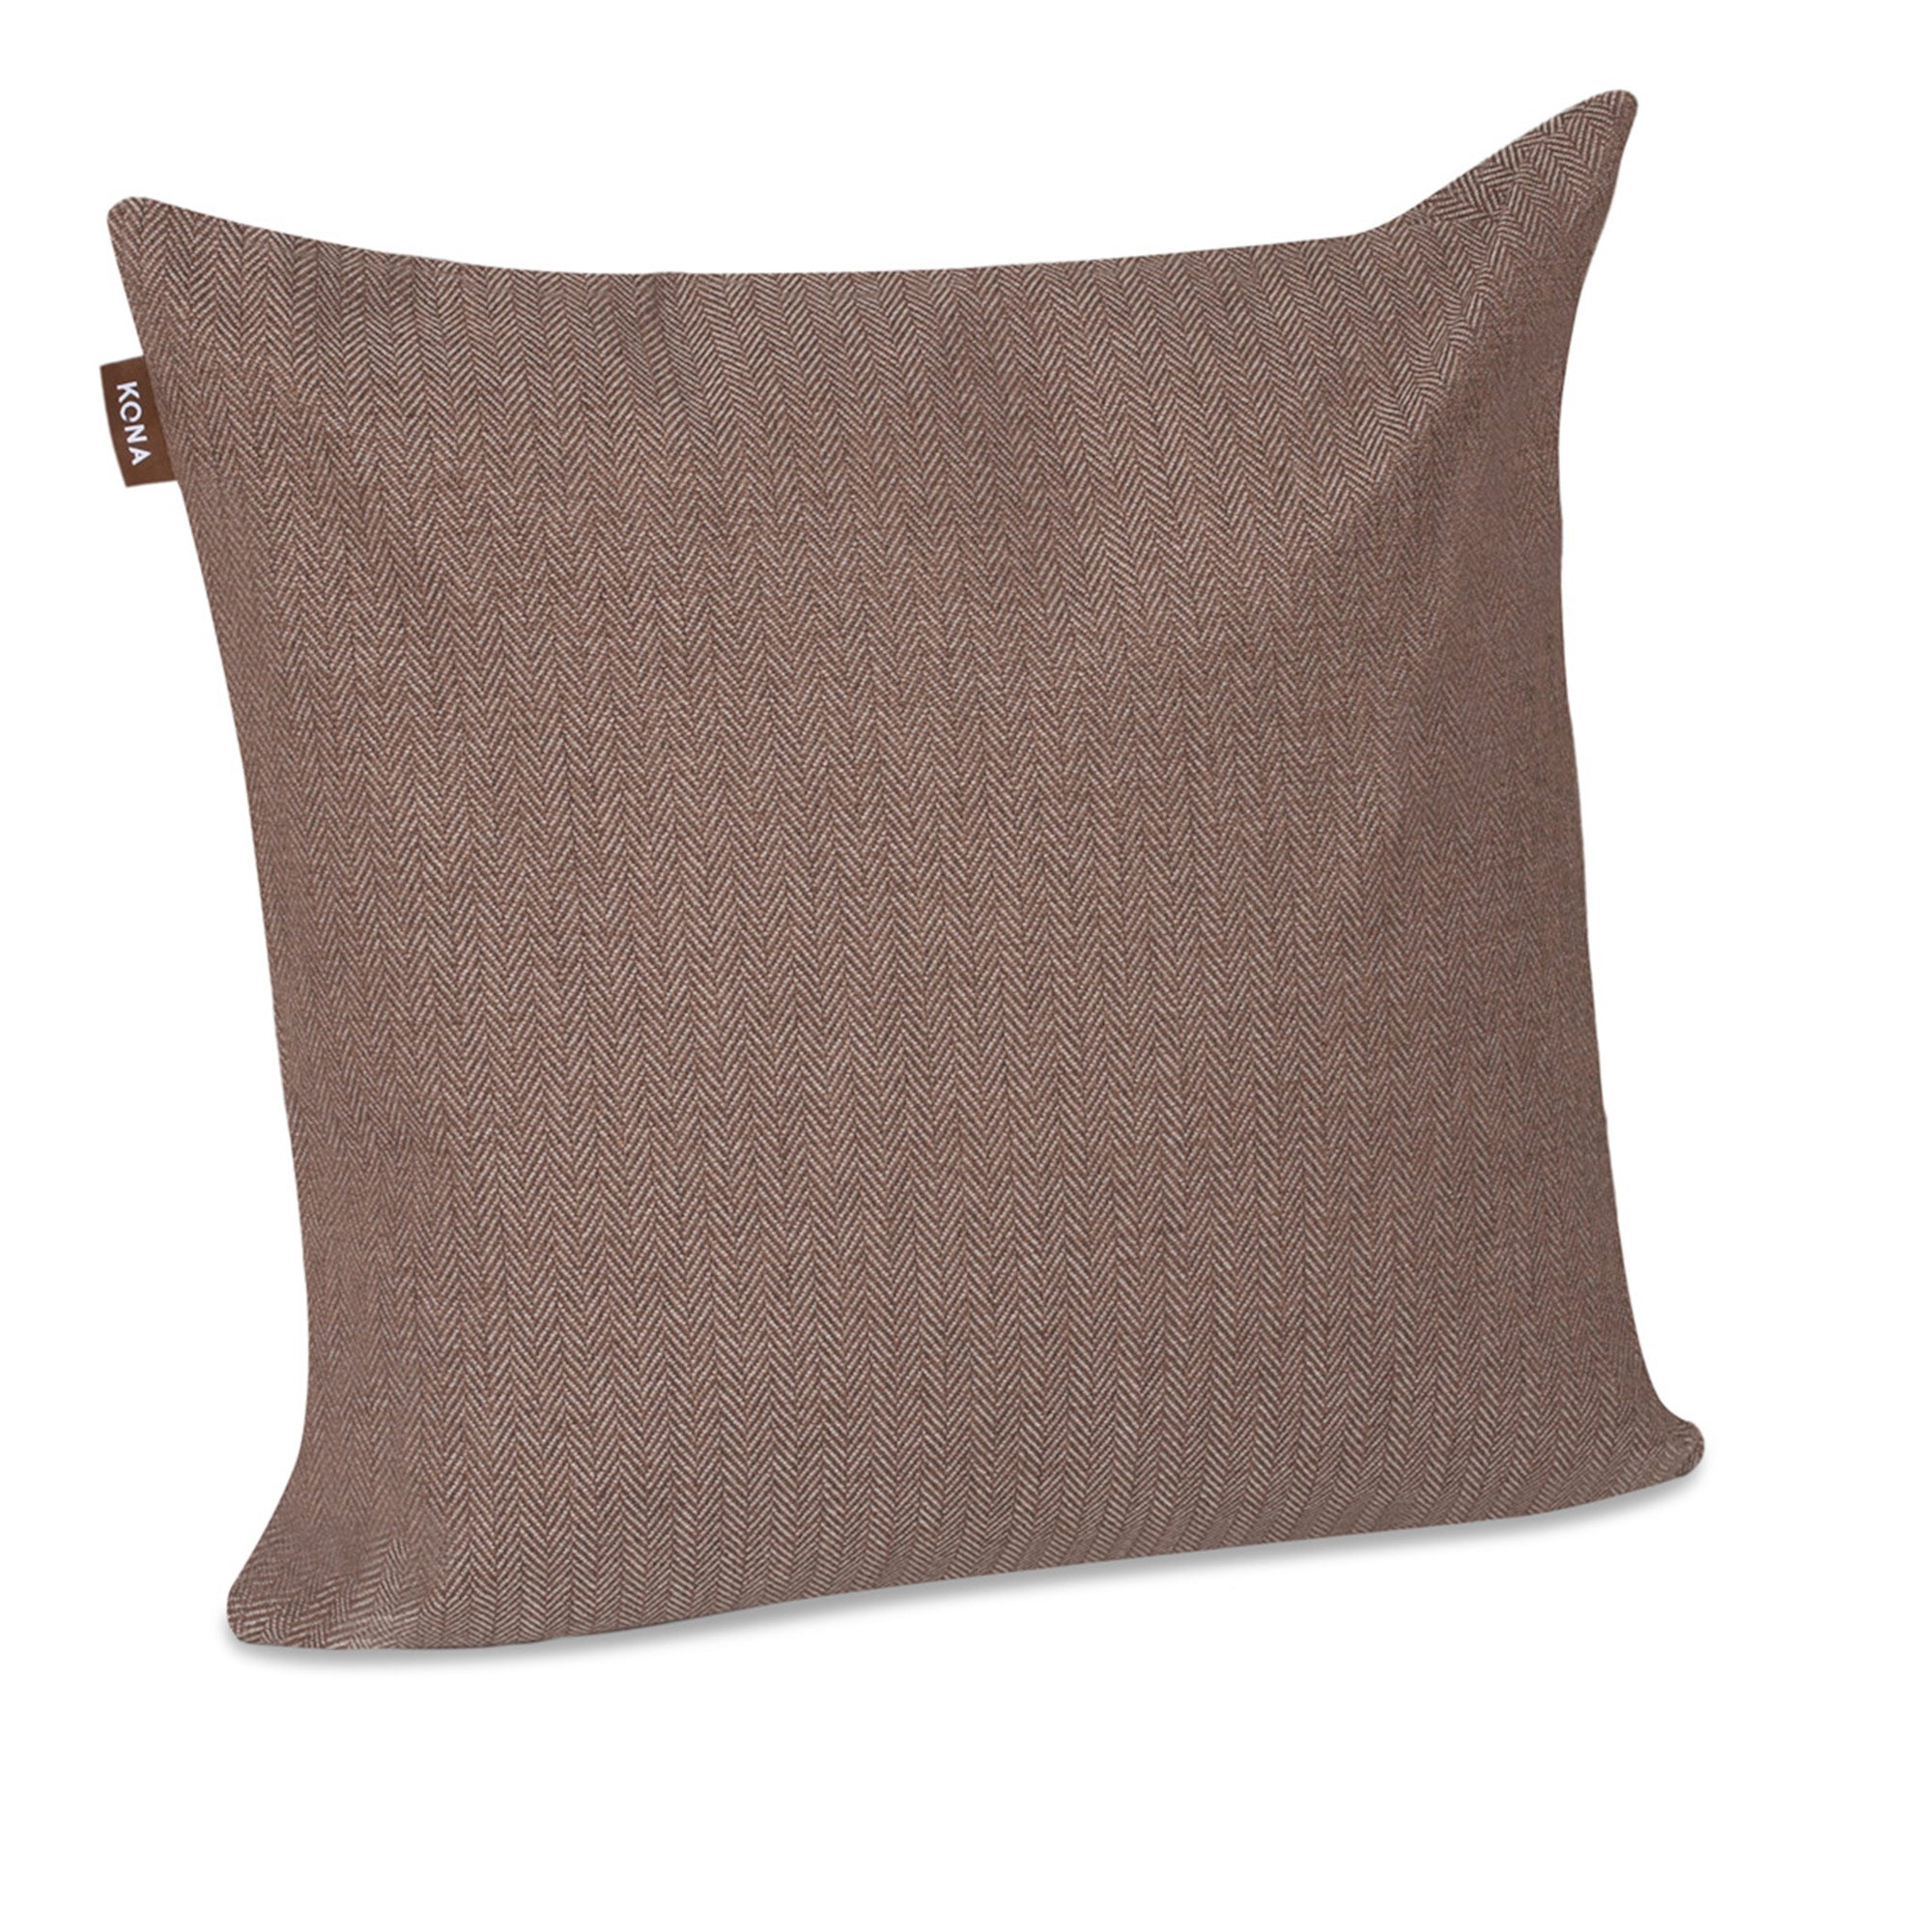 KONA CAVE® Decorative pillow covers, sophisticated brown herringbone fabric. 